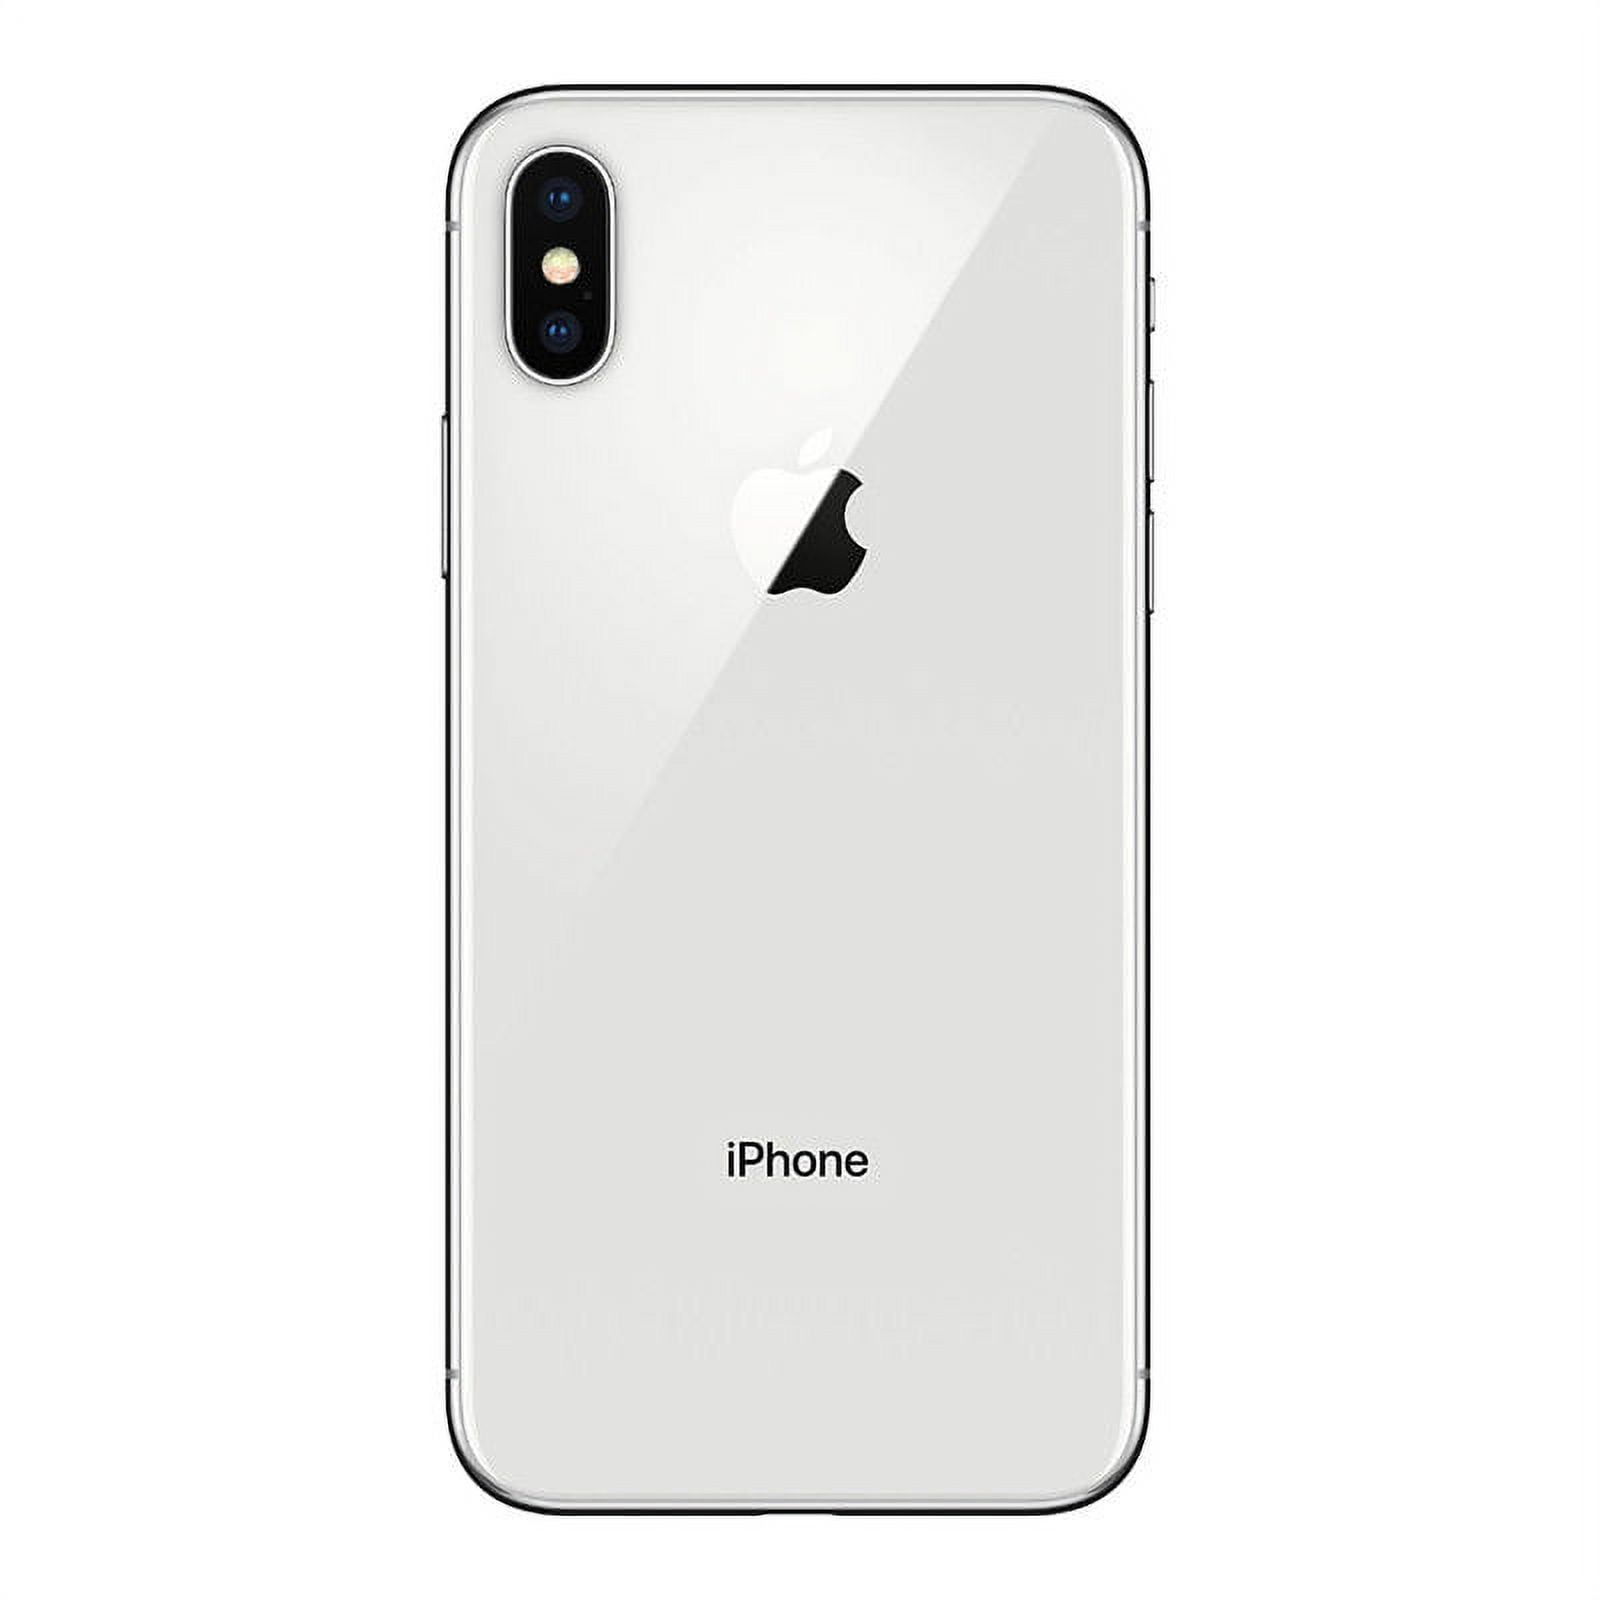 Restored Apple iPhone X 256GB Factory Unlocked Smartphone (Refurbished)